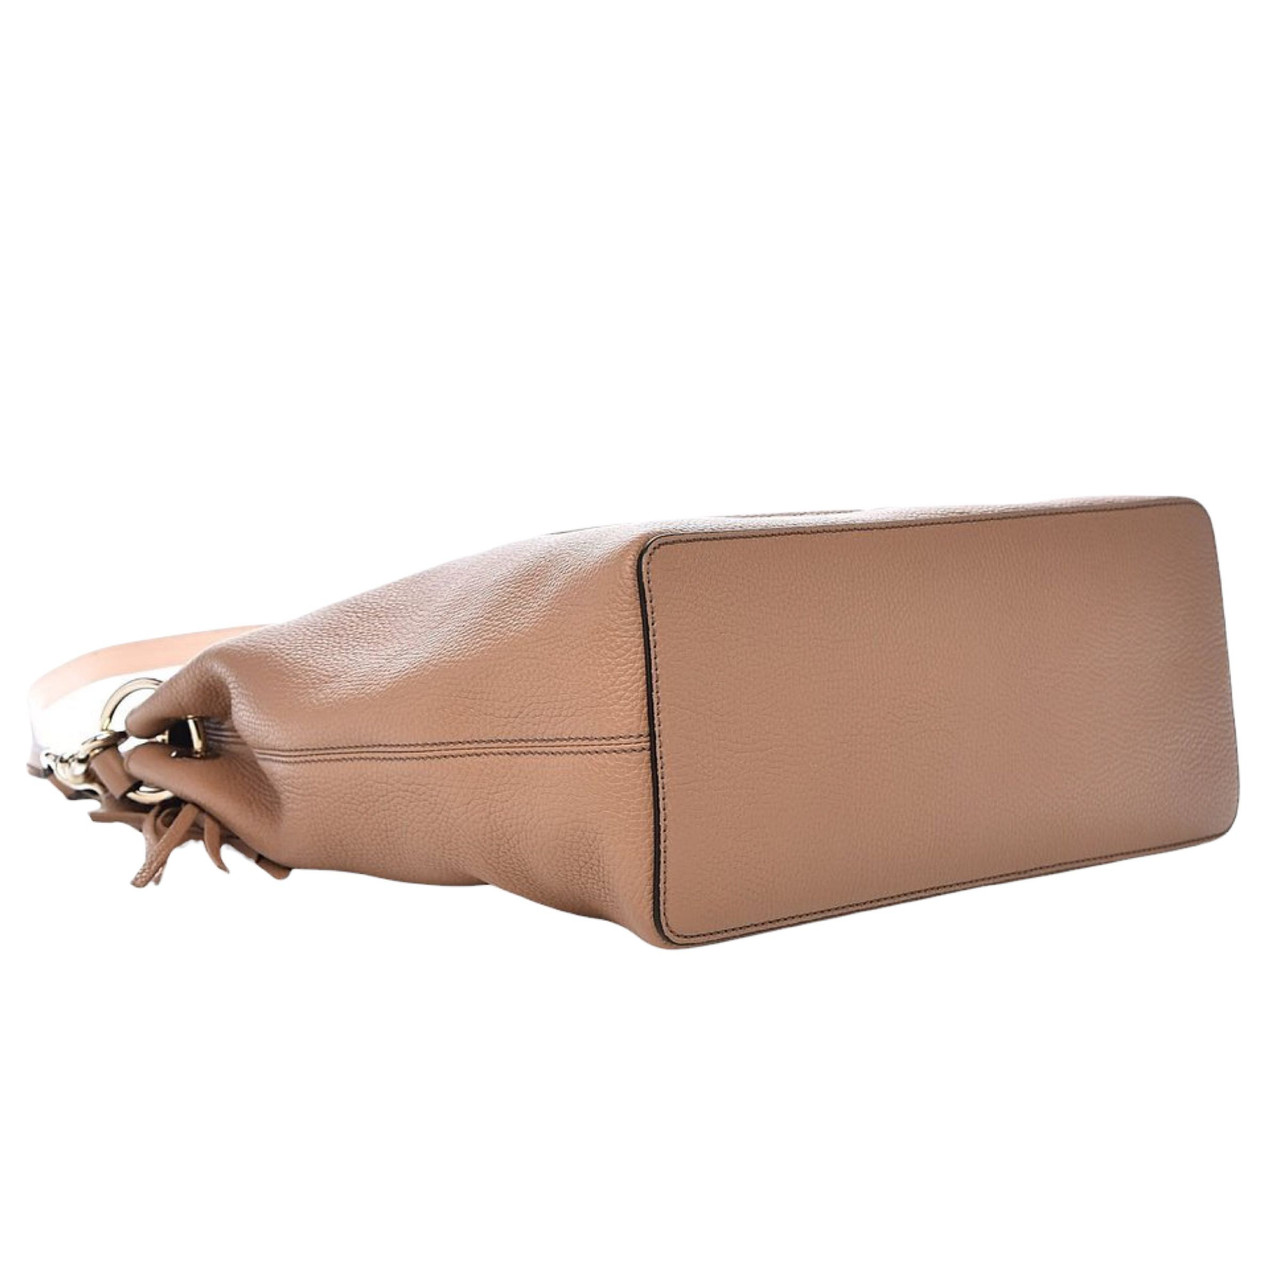 Gucci Soho Beige Leather Tassel Women's Shoulder Bag 536194 A7M0G 2754